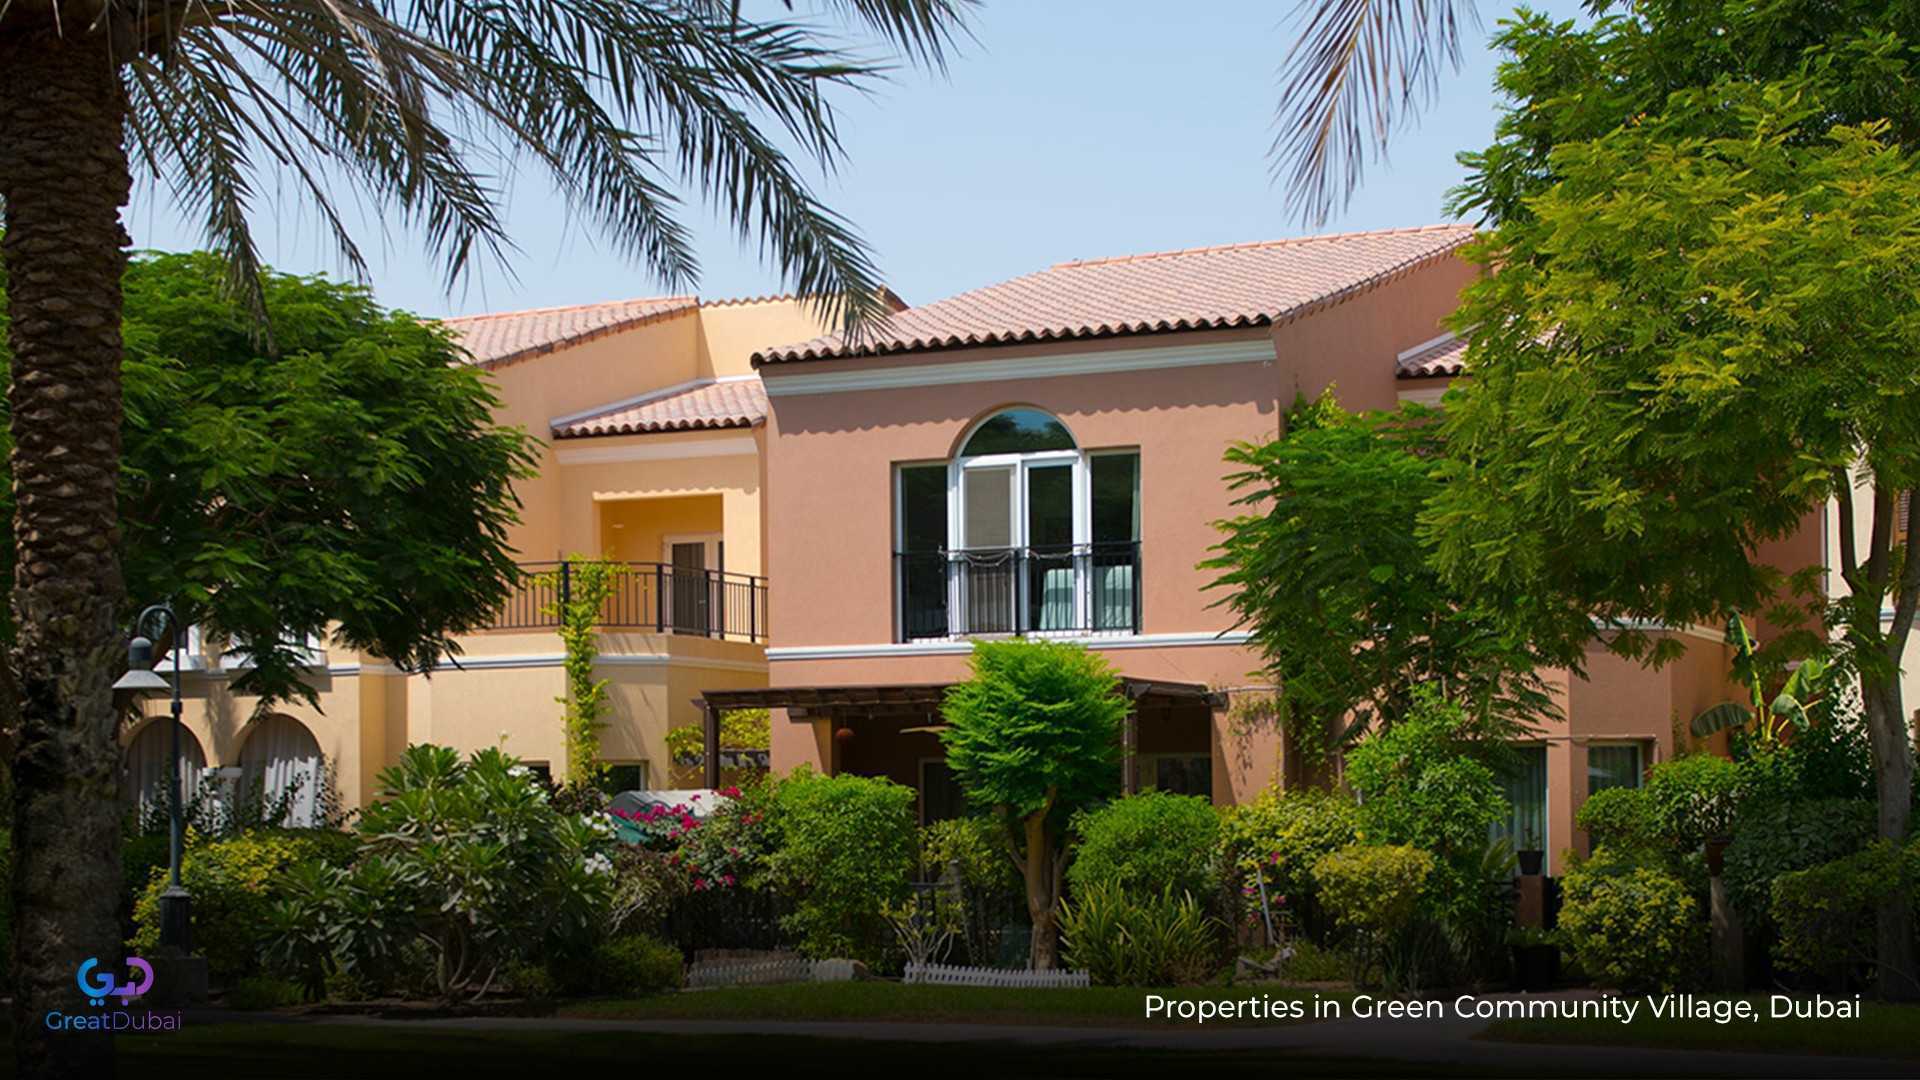 Properties in Green Community Village, Dubai